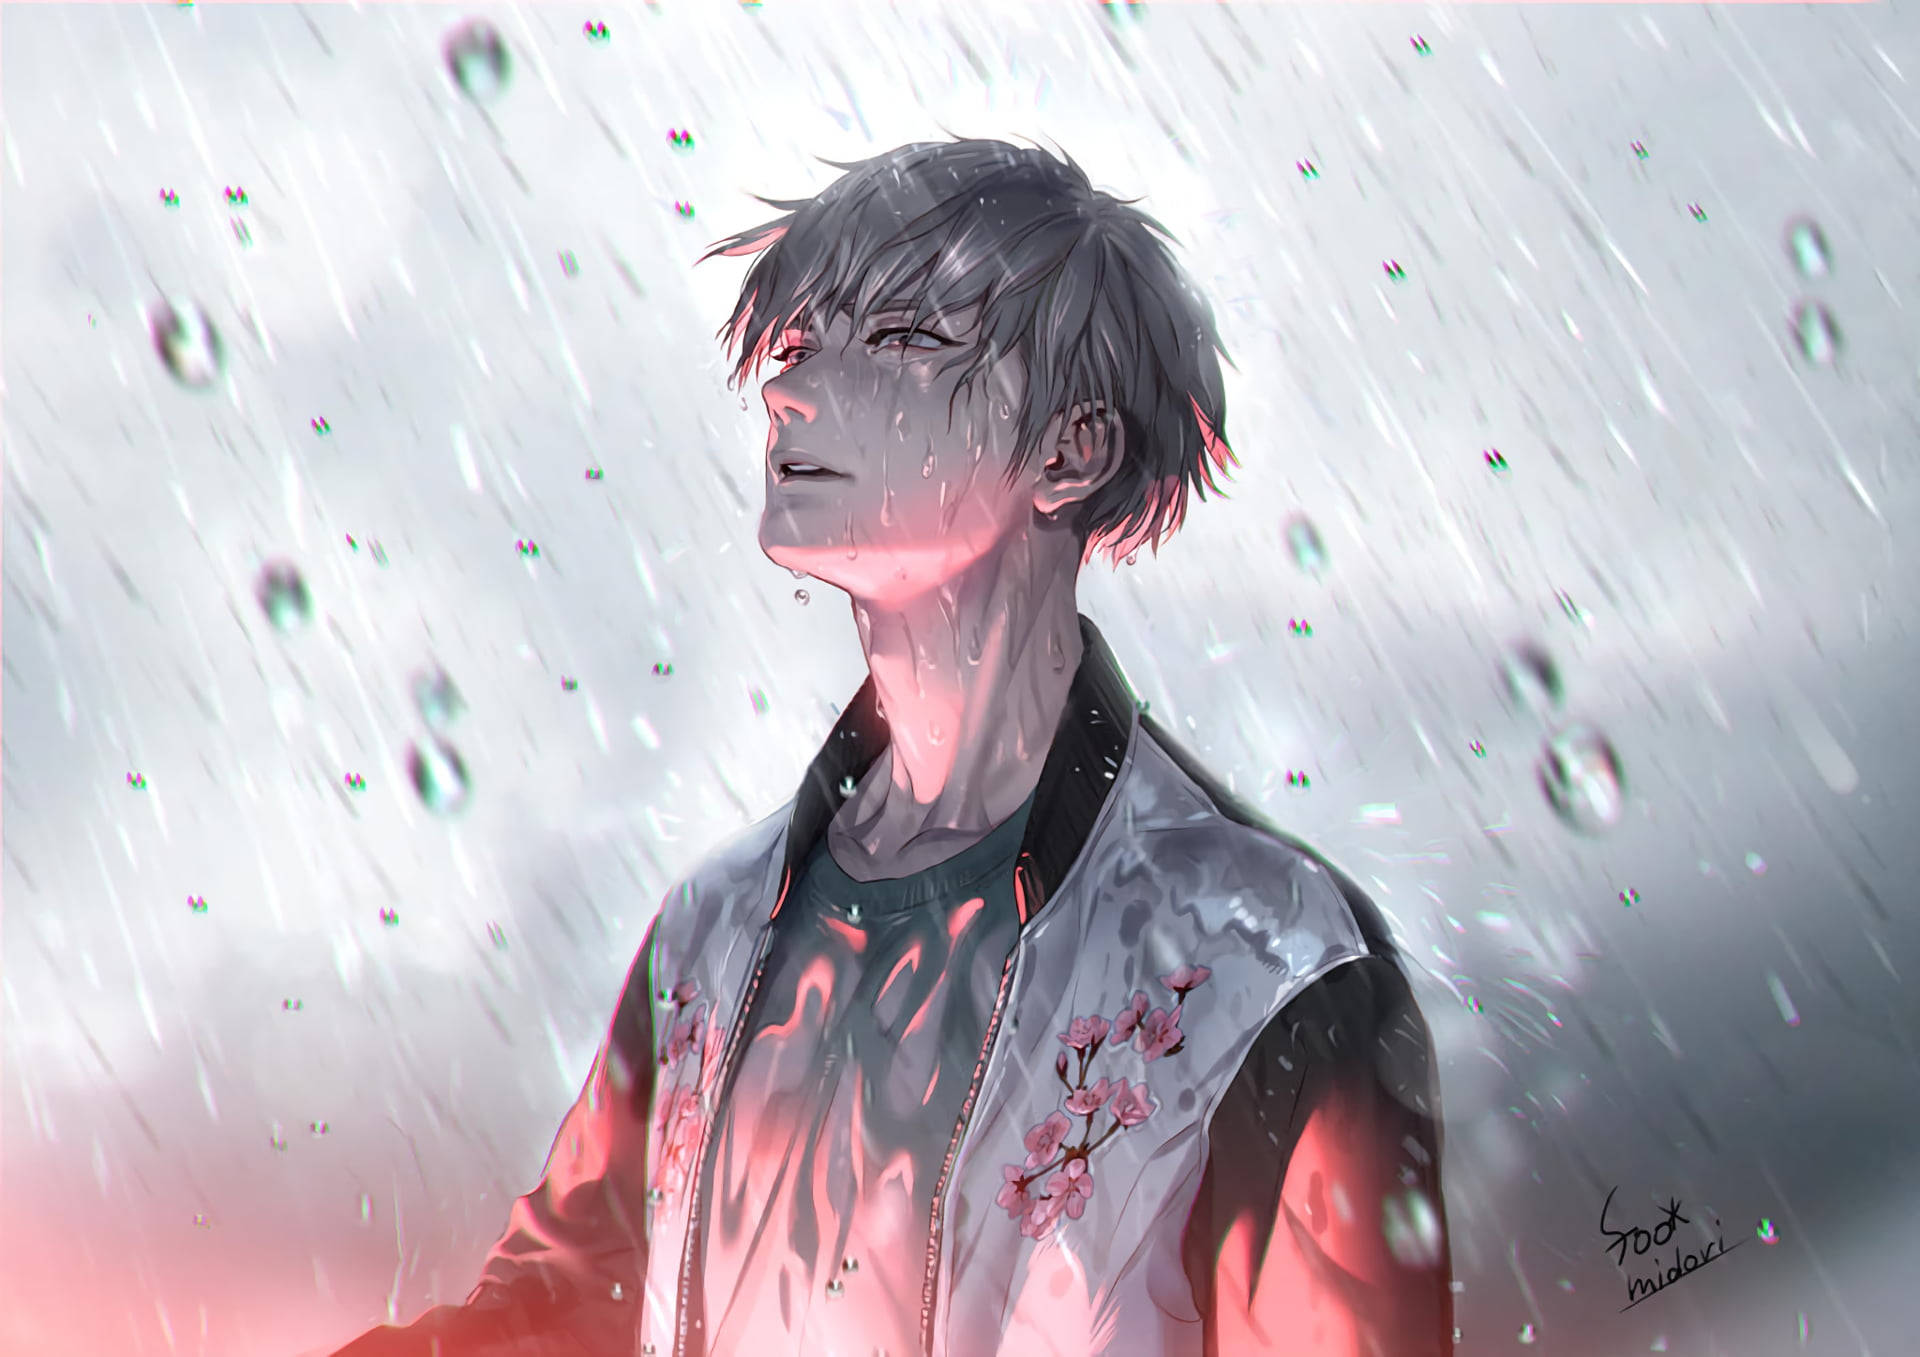 Alone Sad Anime Boys Soaked In The Rain